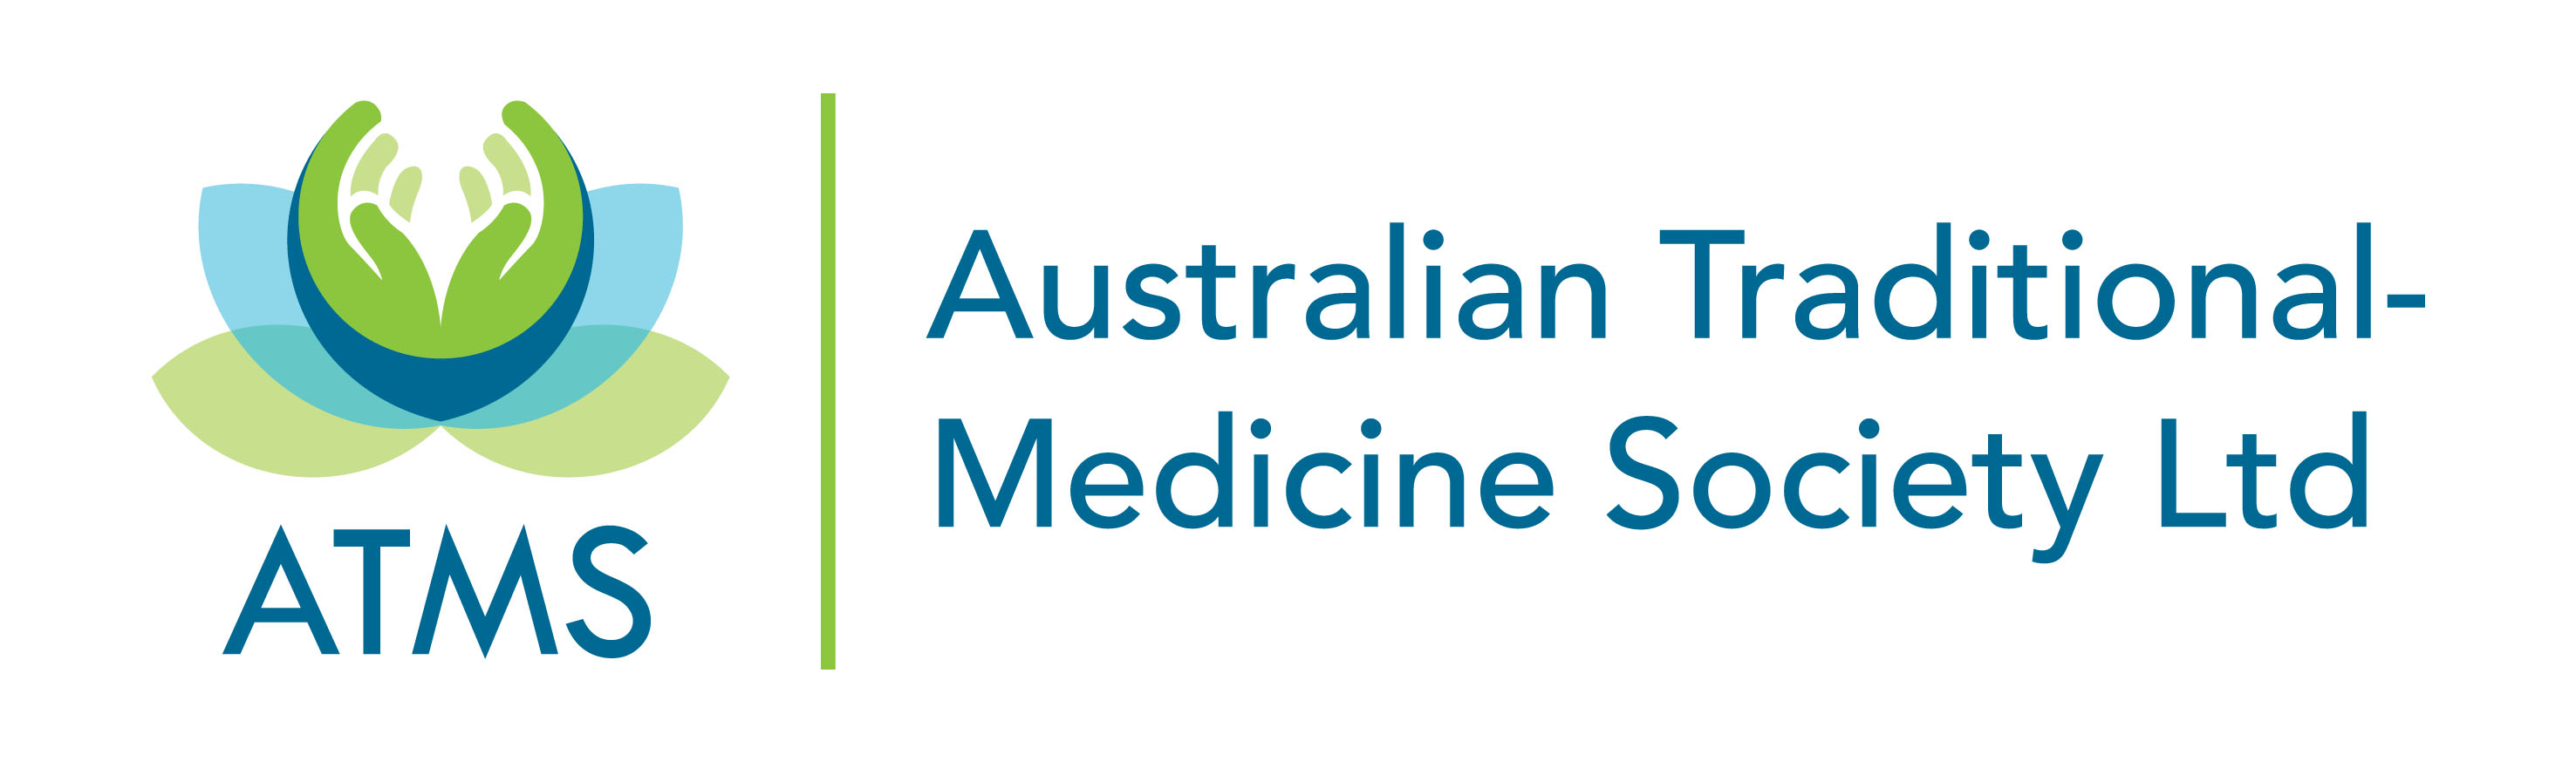 ATMS - Australian Traditional Medicine Society